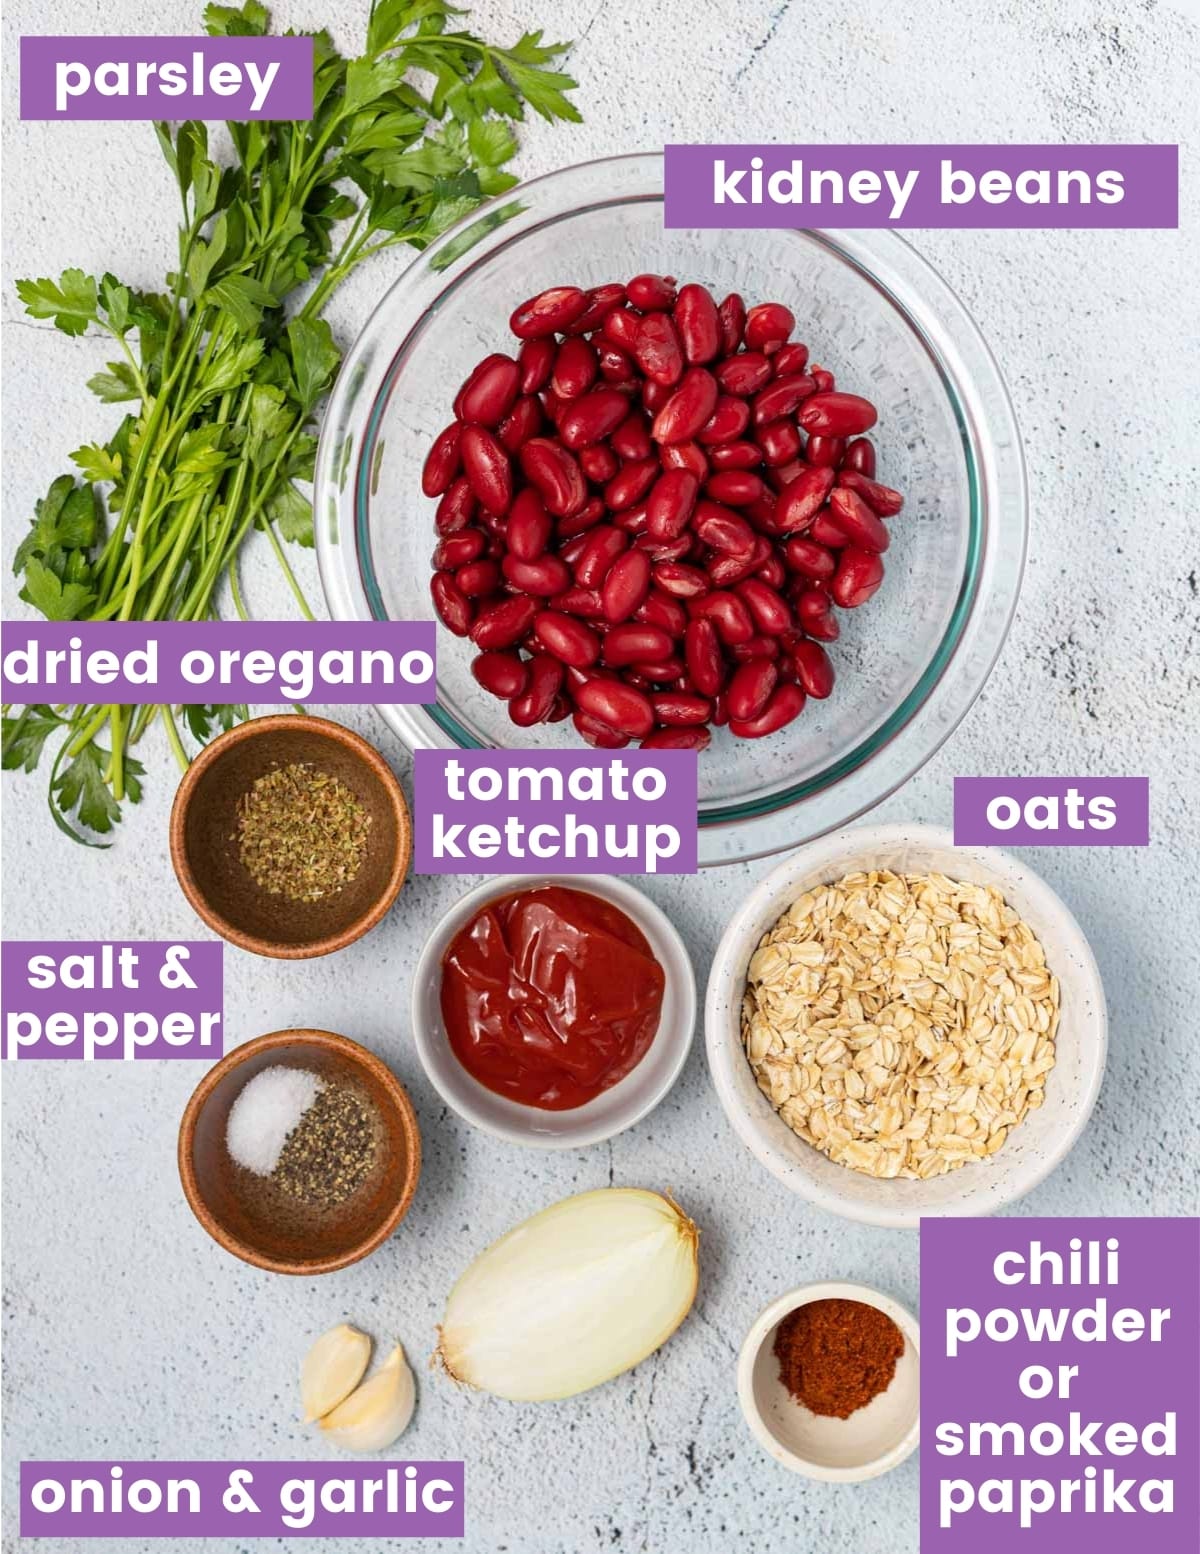 ingredients to make kidney bean burgers as per written list 